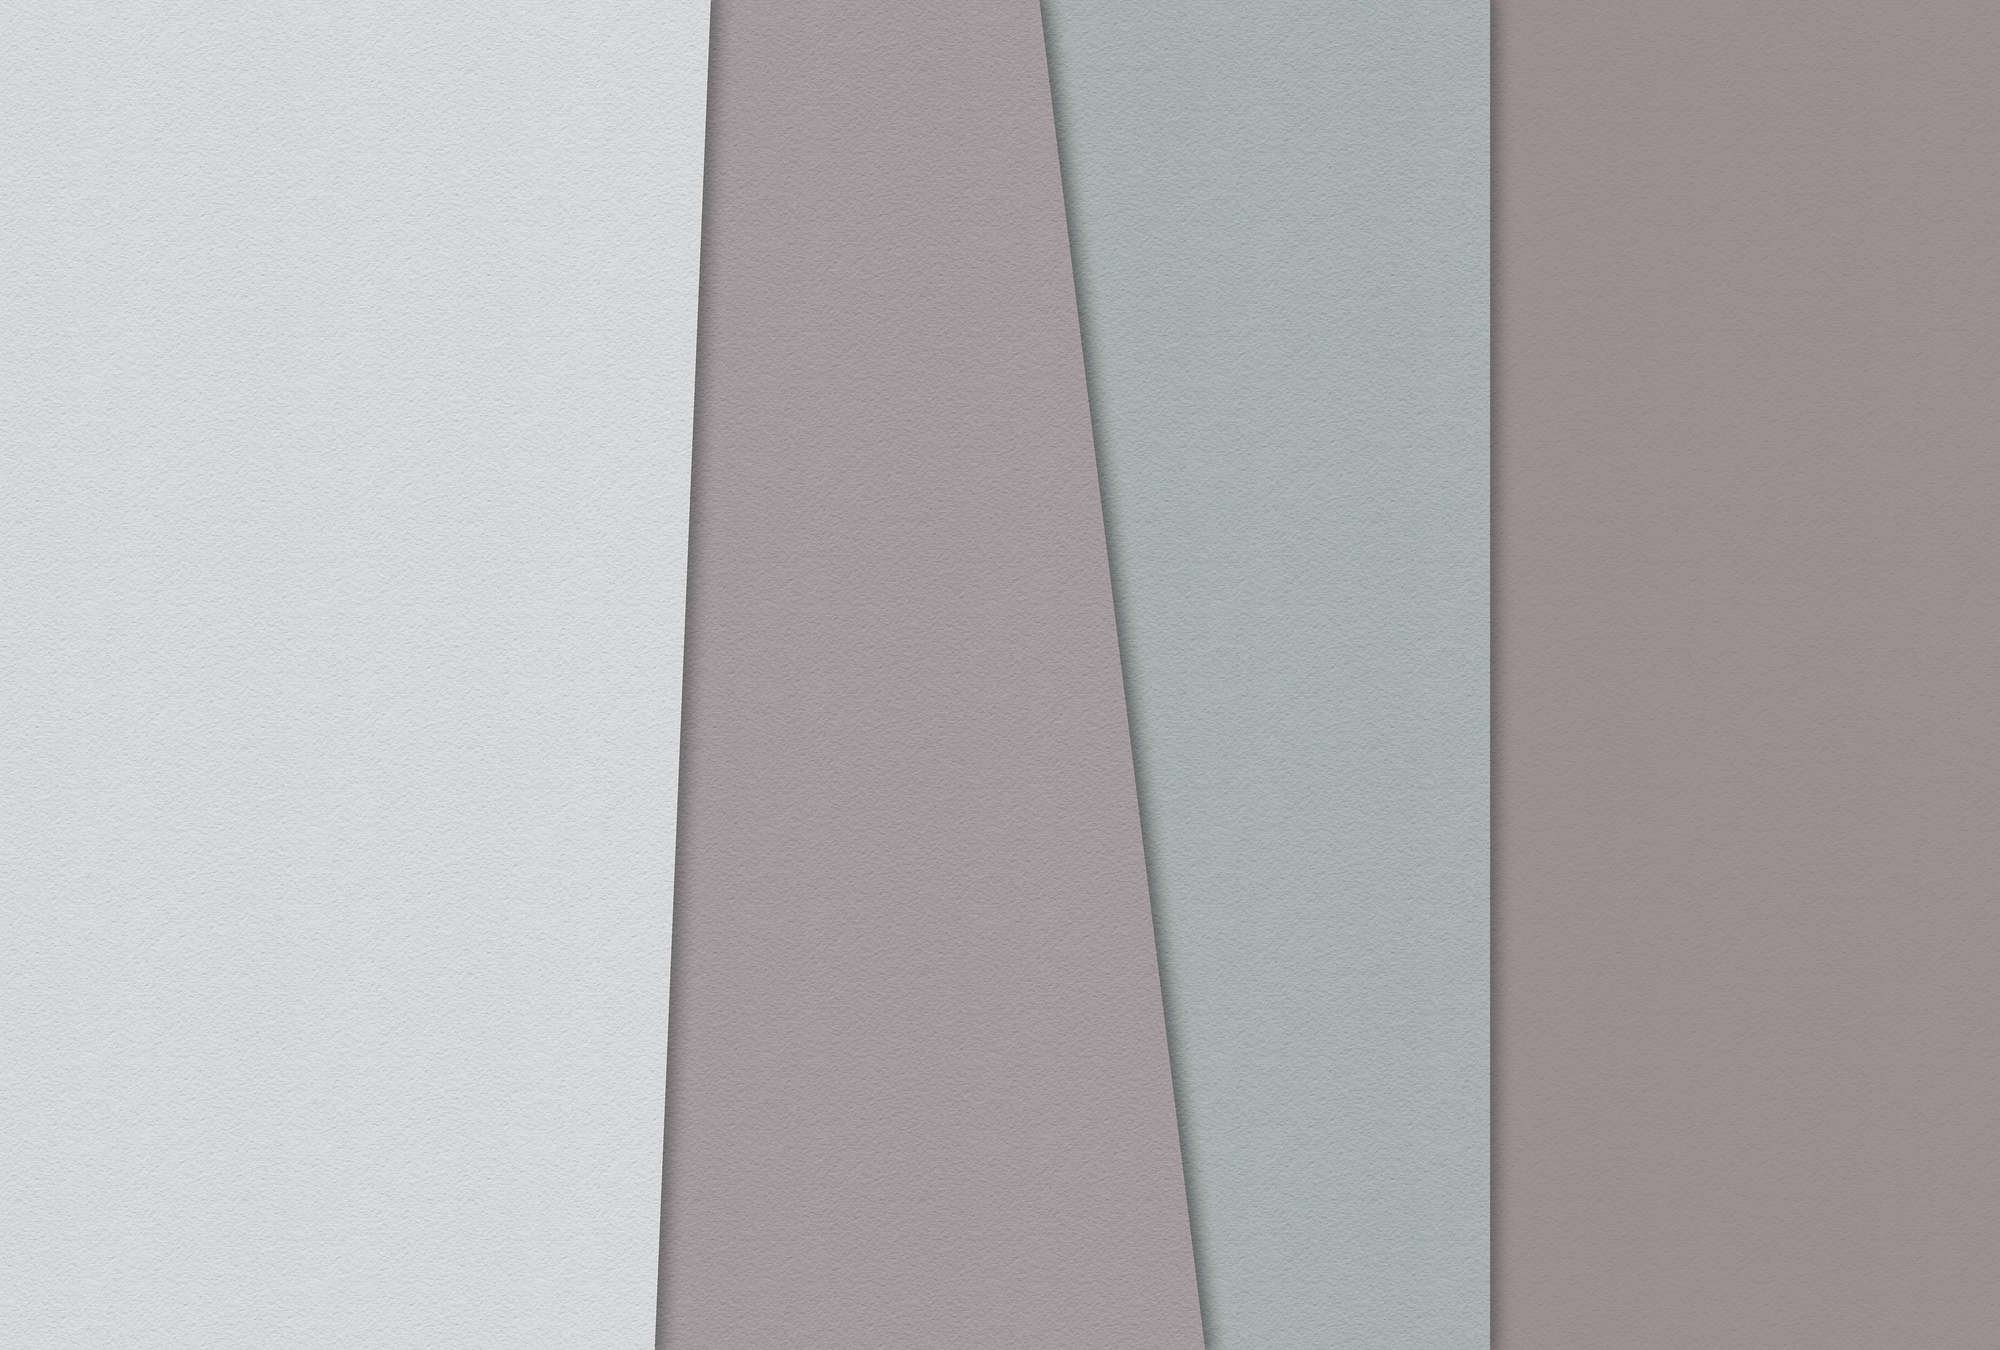             Papel Estratificado 3 - Papel Pintado Minimalista Campos de Color Textura de Papel Hecho a Mano - Azul, Crema | Liso Nacarado
        